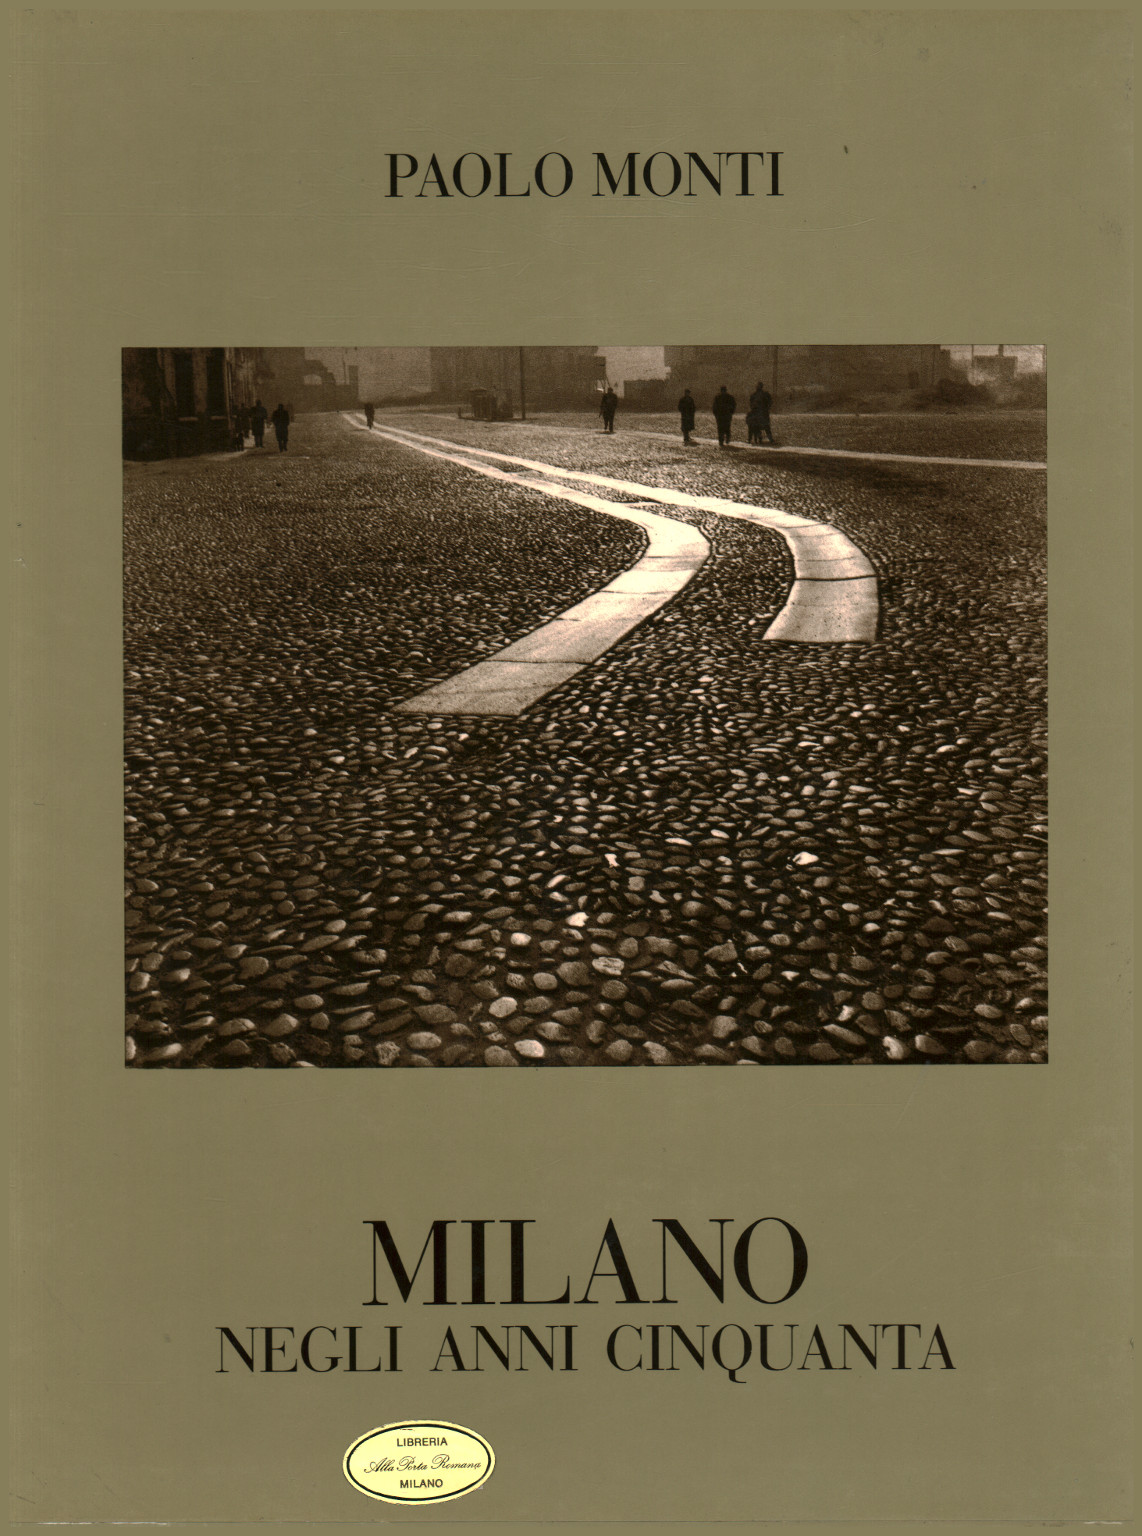 Milan in the fifties